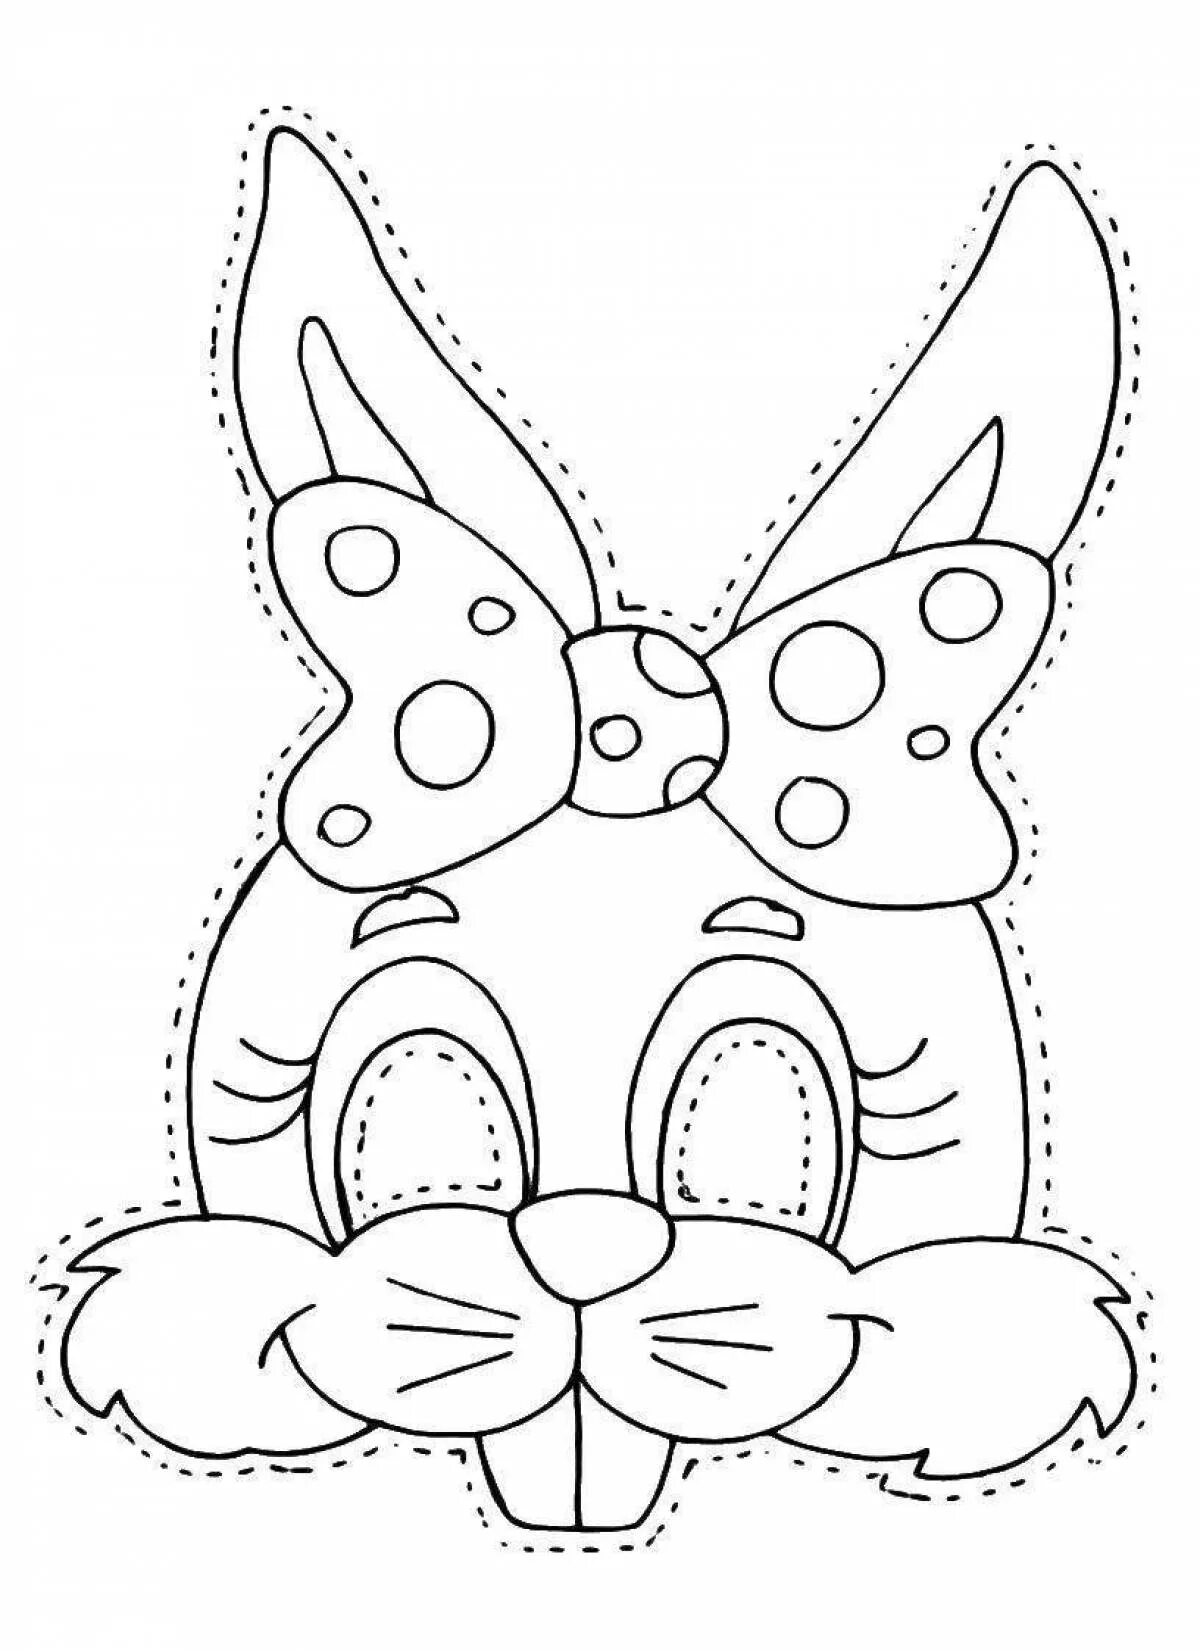 Шаблоны детских масок. Маска заяц. Маска зайца из бумаги. Маска зайца на голову из бумаги. Шаблон маски для детей.